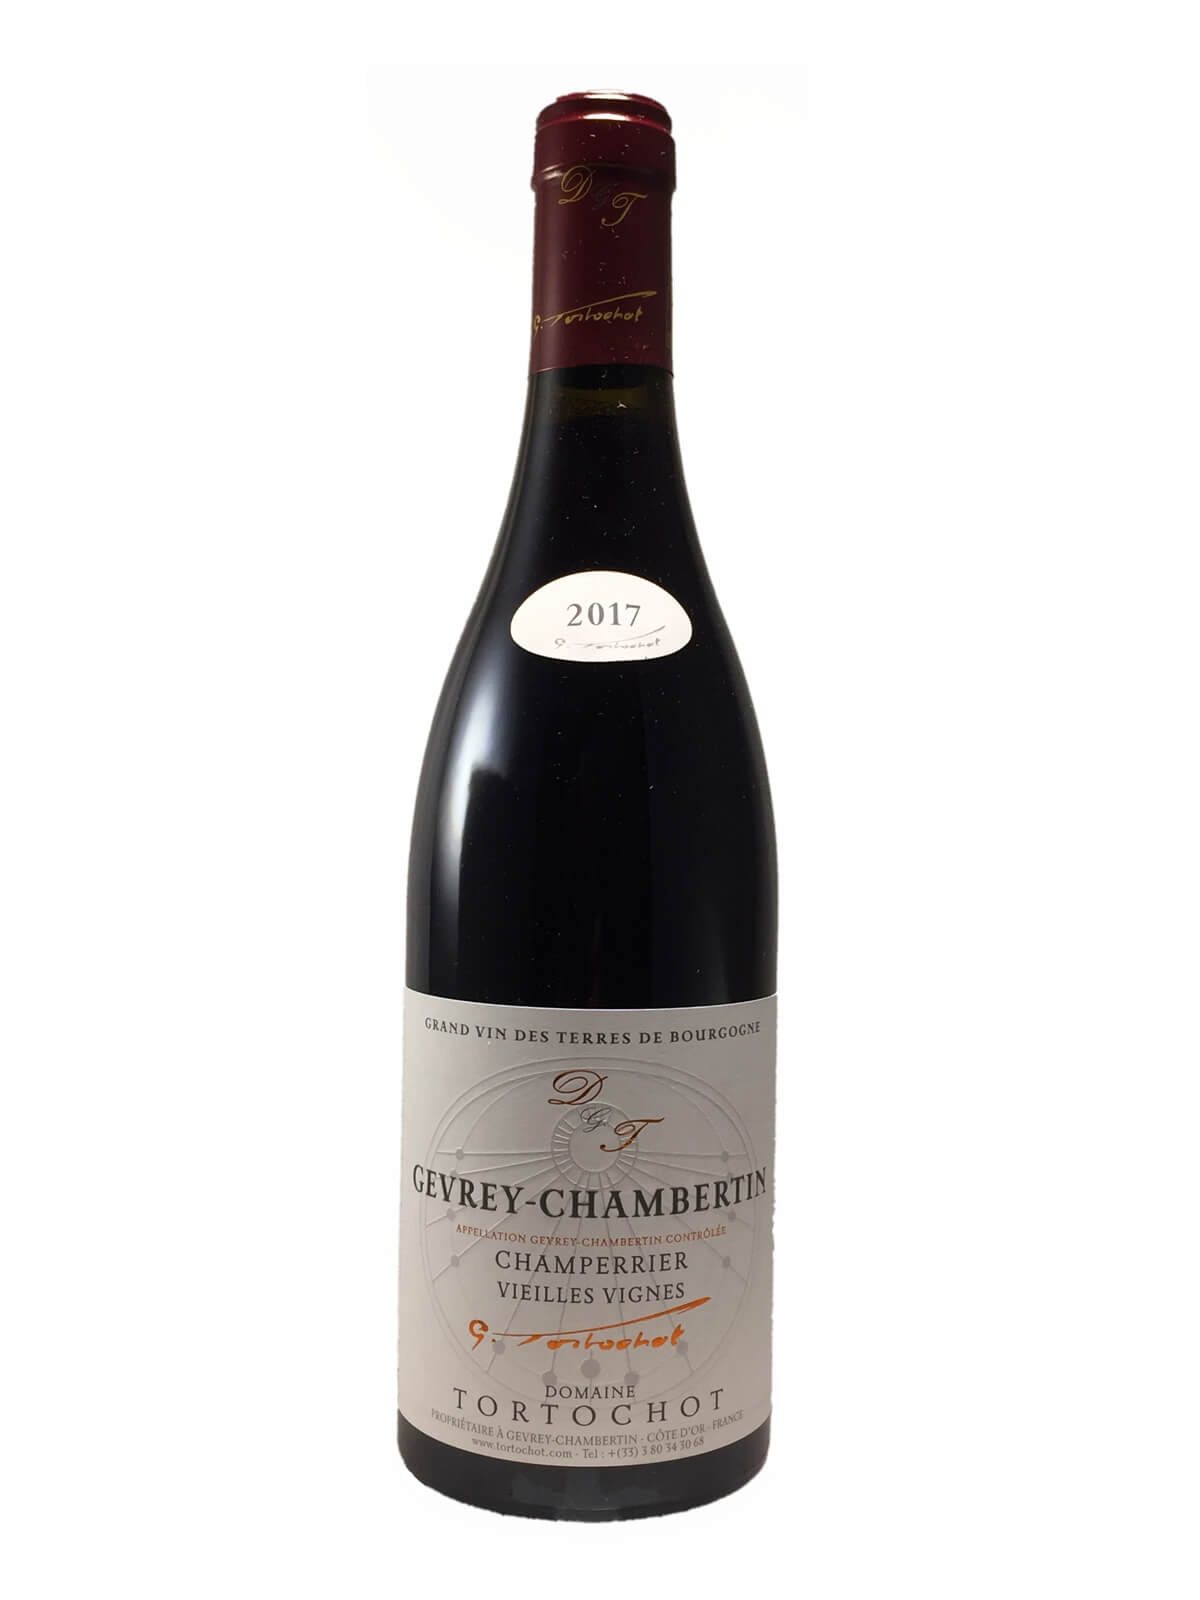 GEVREY CHAMBERTIN Champerrier Vieilles vignes 2017 Domaine TORTOCHOT